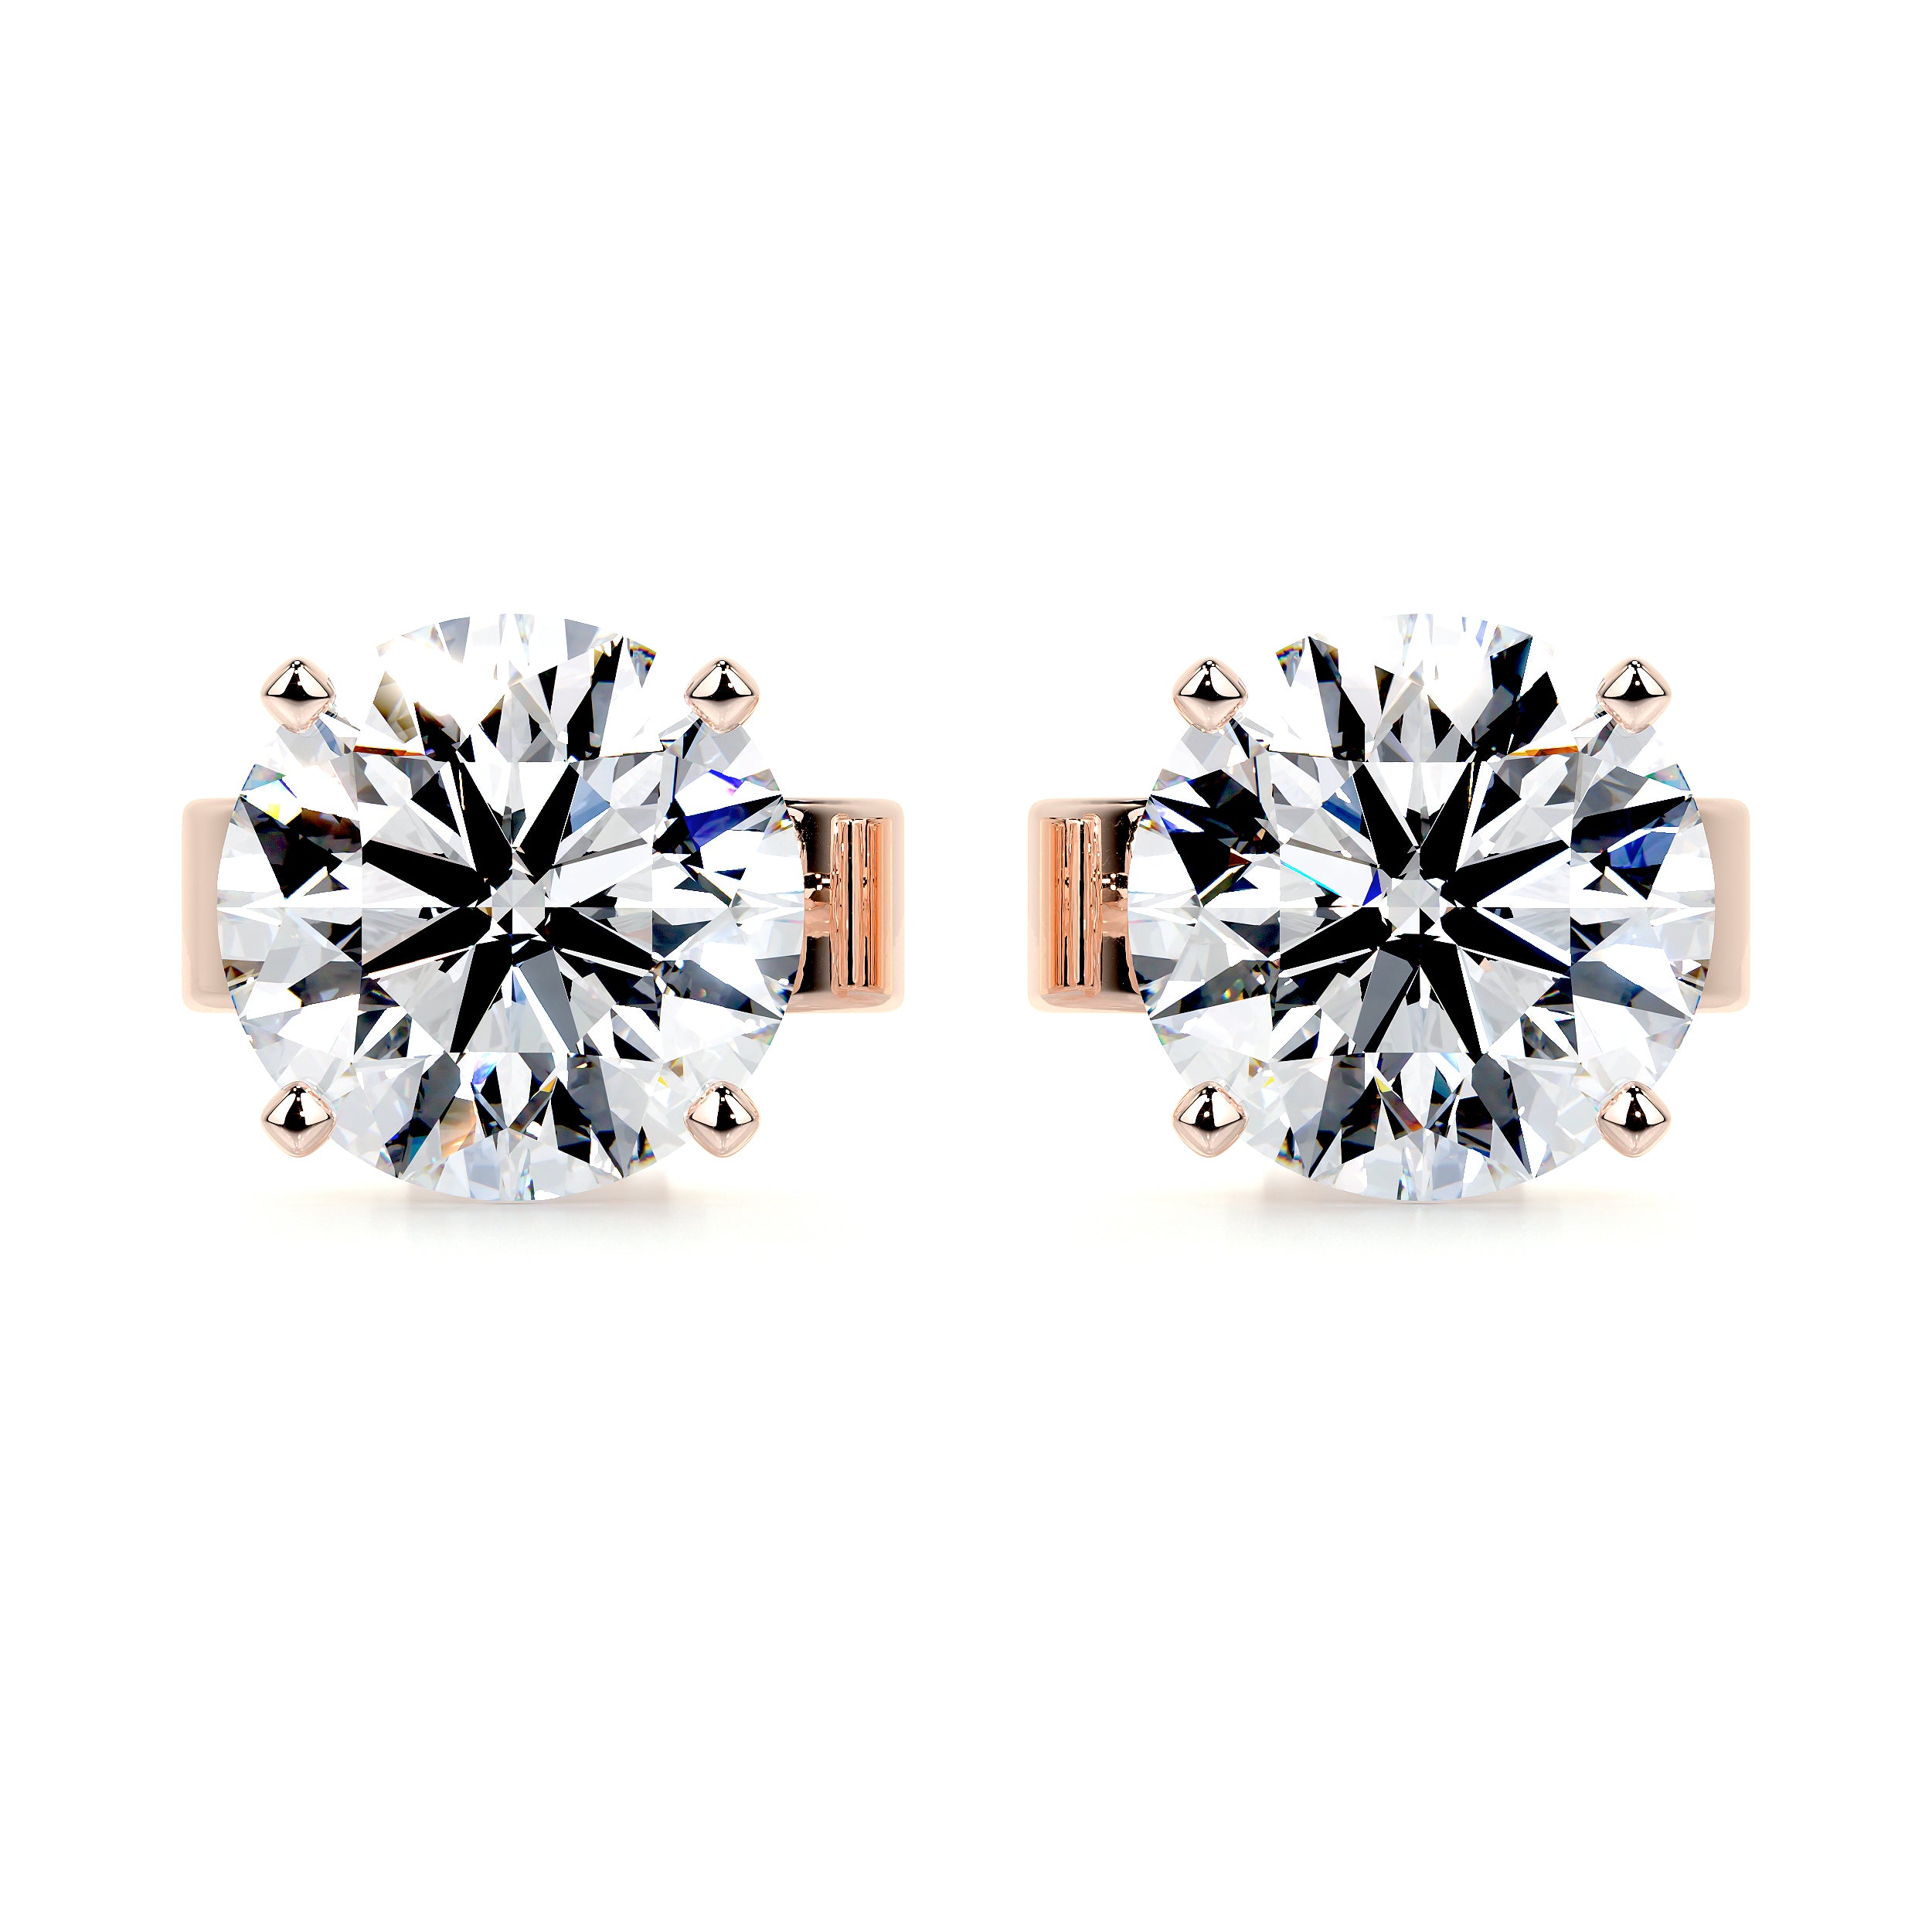 Allen Diamond Earrings   (6 Carat) -14K Rose Gold